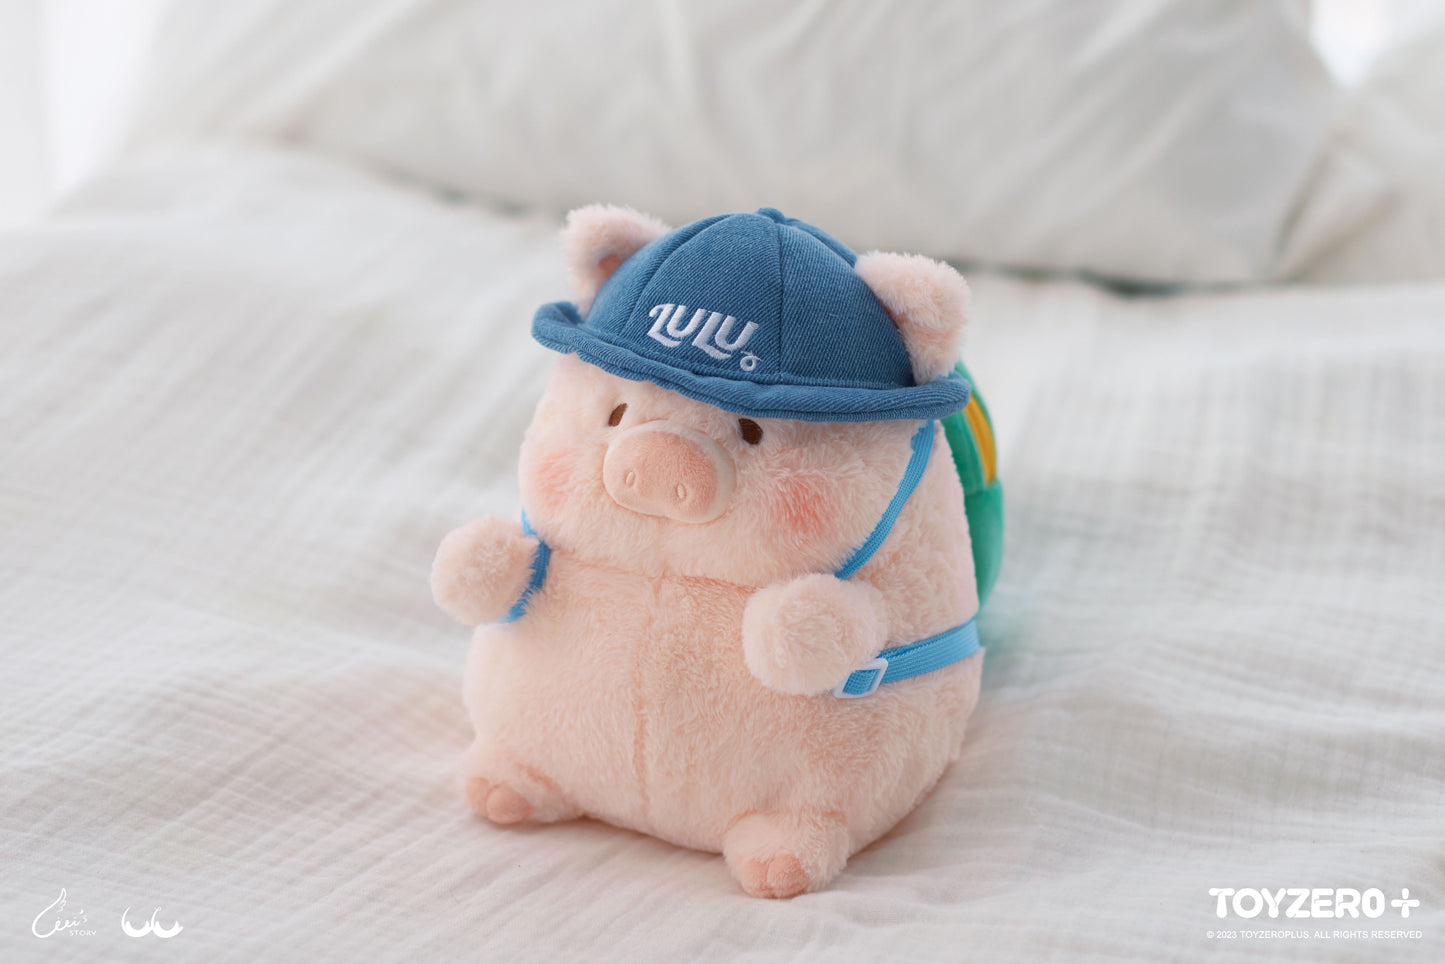 LuLu the Piggy Find Your Way - 20/30cm Travel With Me Plush Toy 罐頭豬LuLu 旅行系列 - 20cm 與Lu同行毛絨公仔